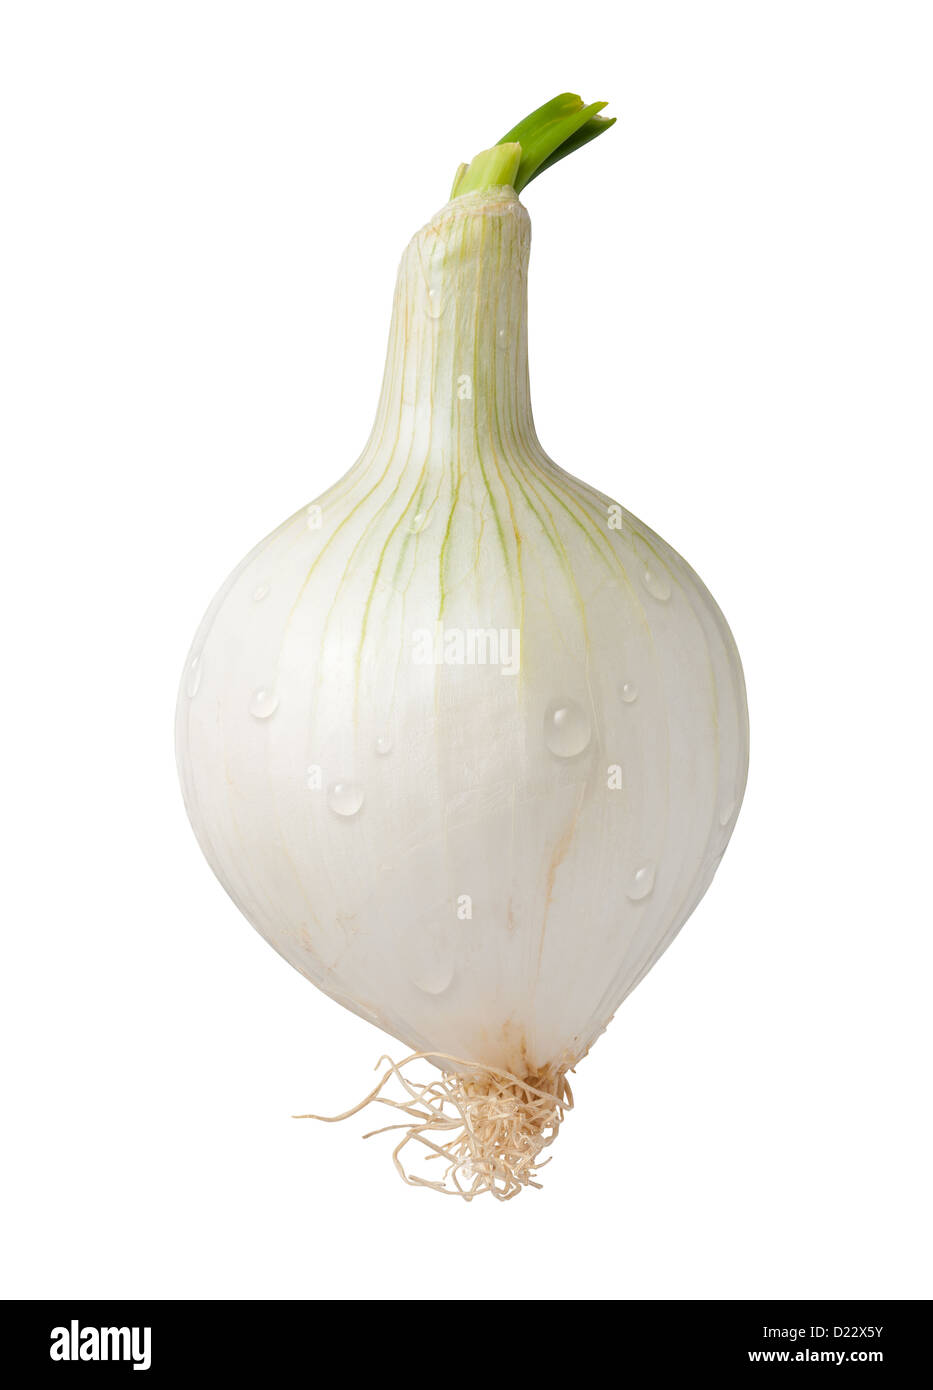 Knob Onion isolated on white. Stock Photo